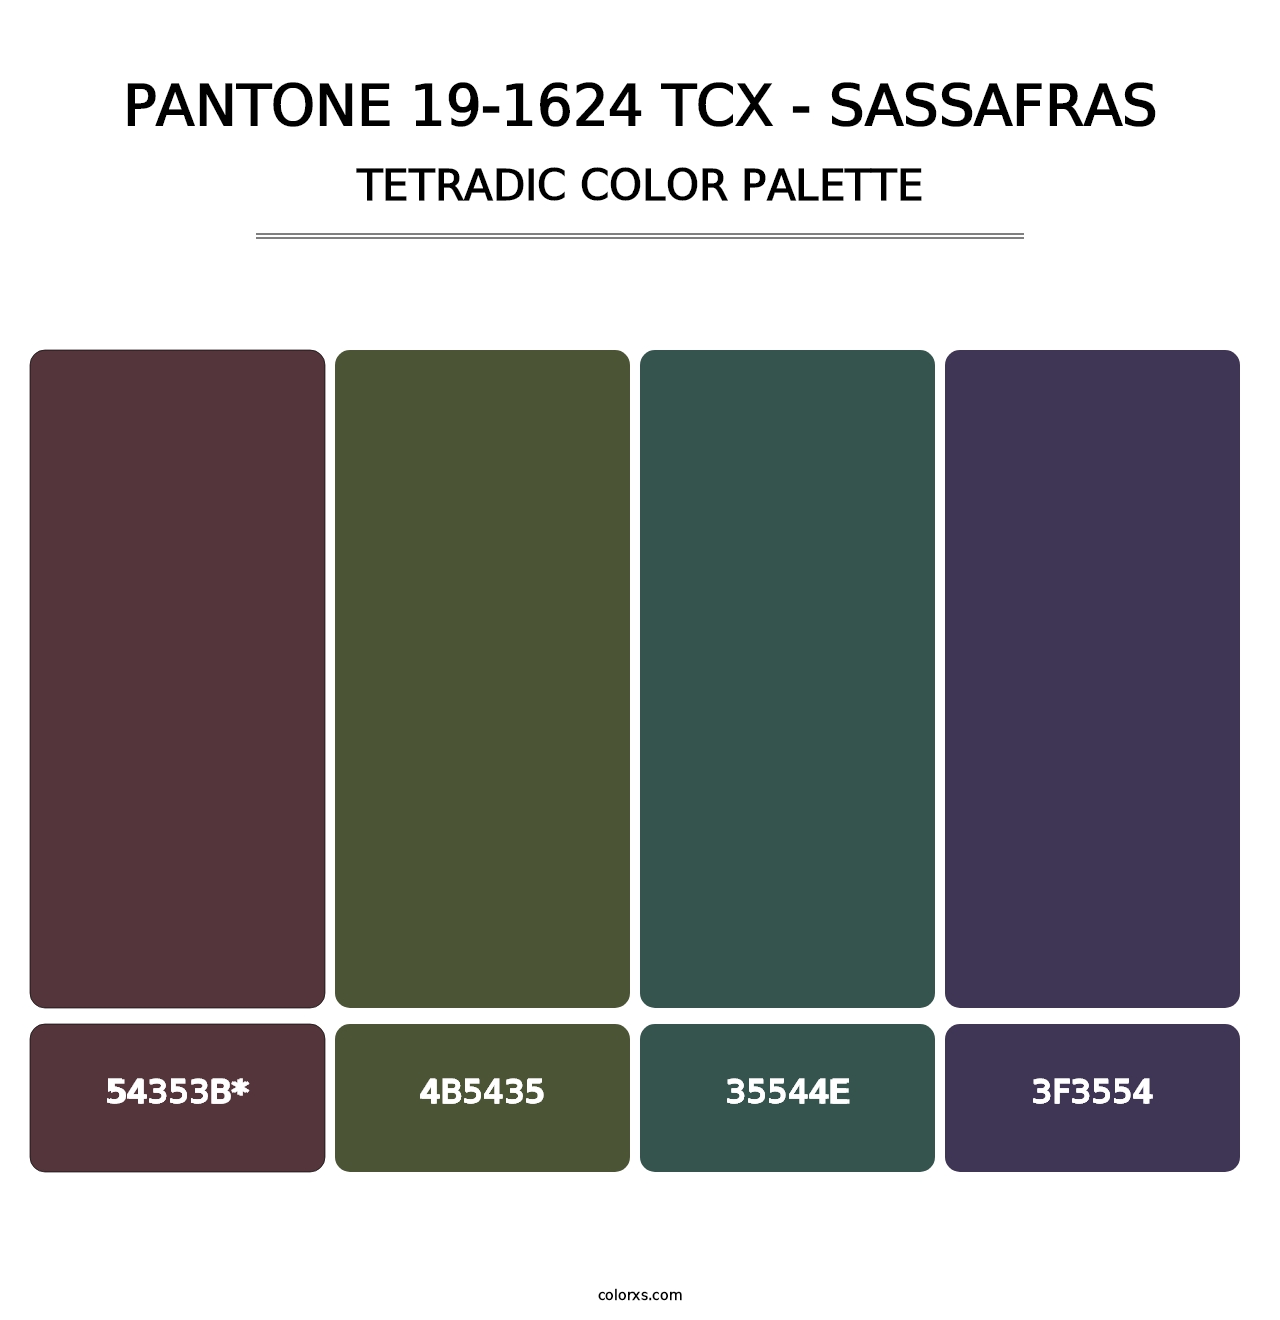 PANTONE 19-1624 TCX - Sassafras - Tetradic Color Palette